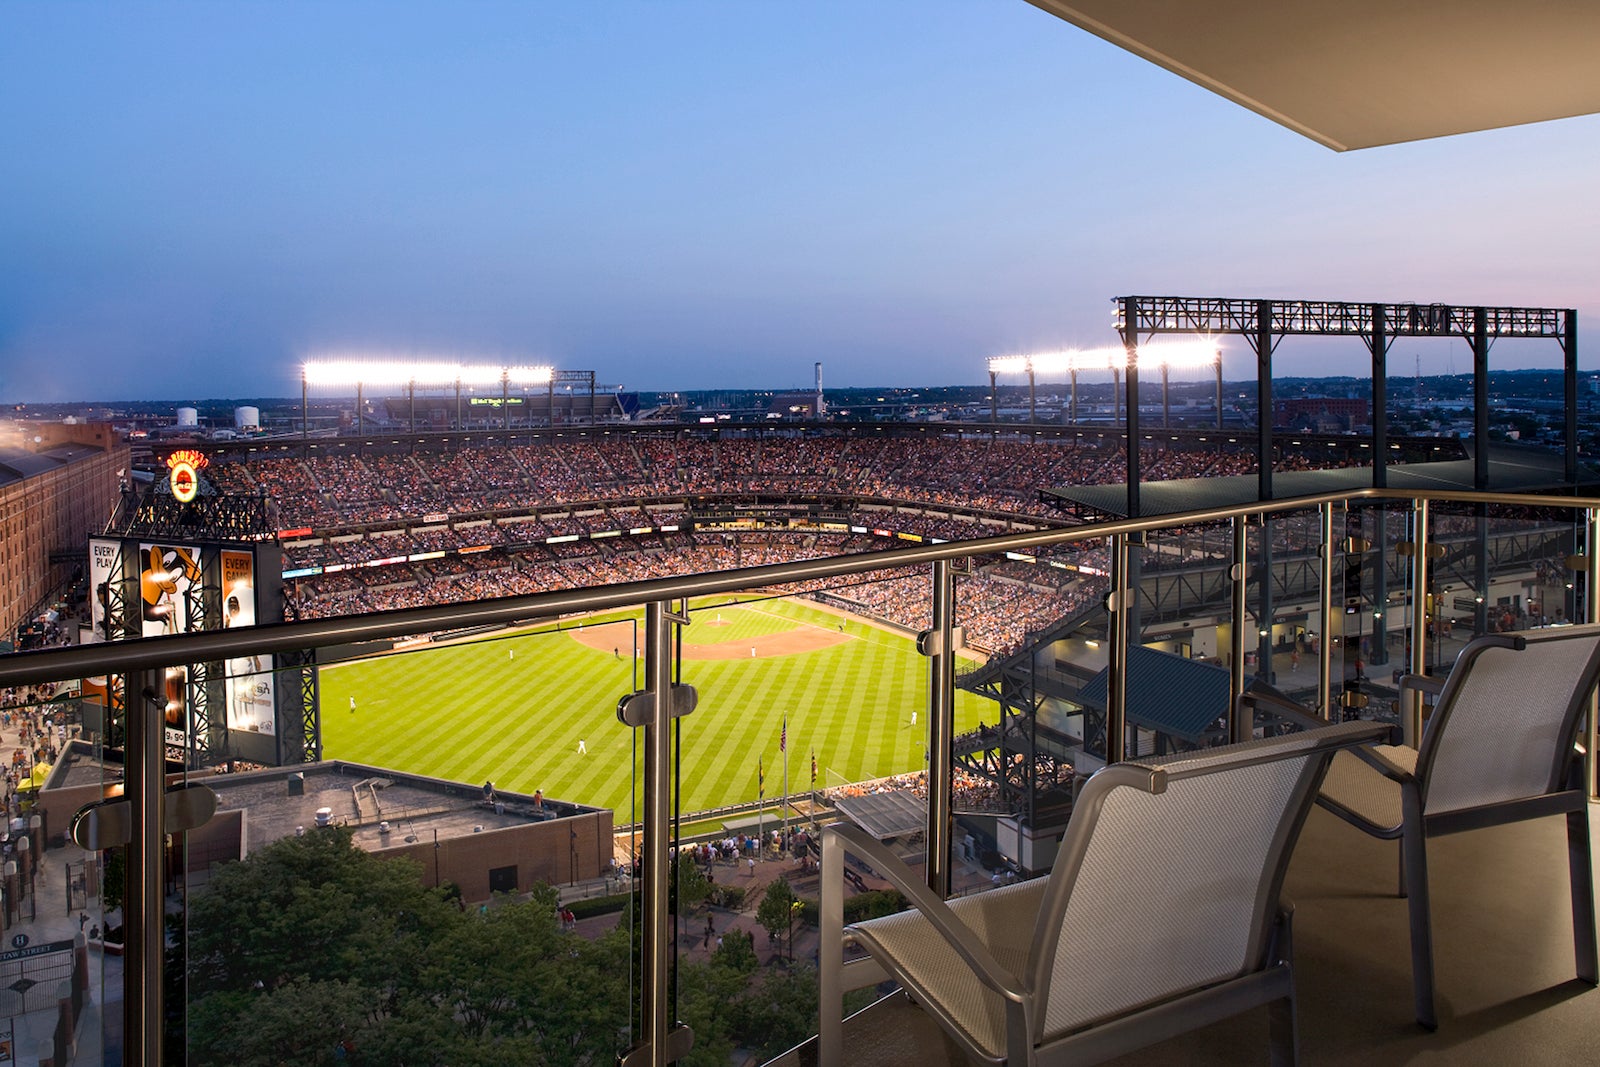 Hotels with MLB baseball stadium views